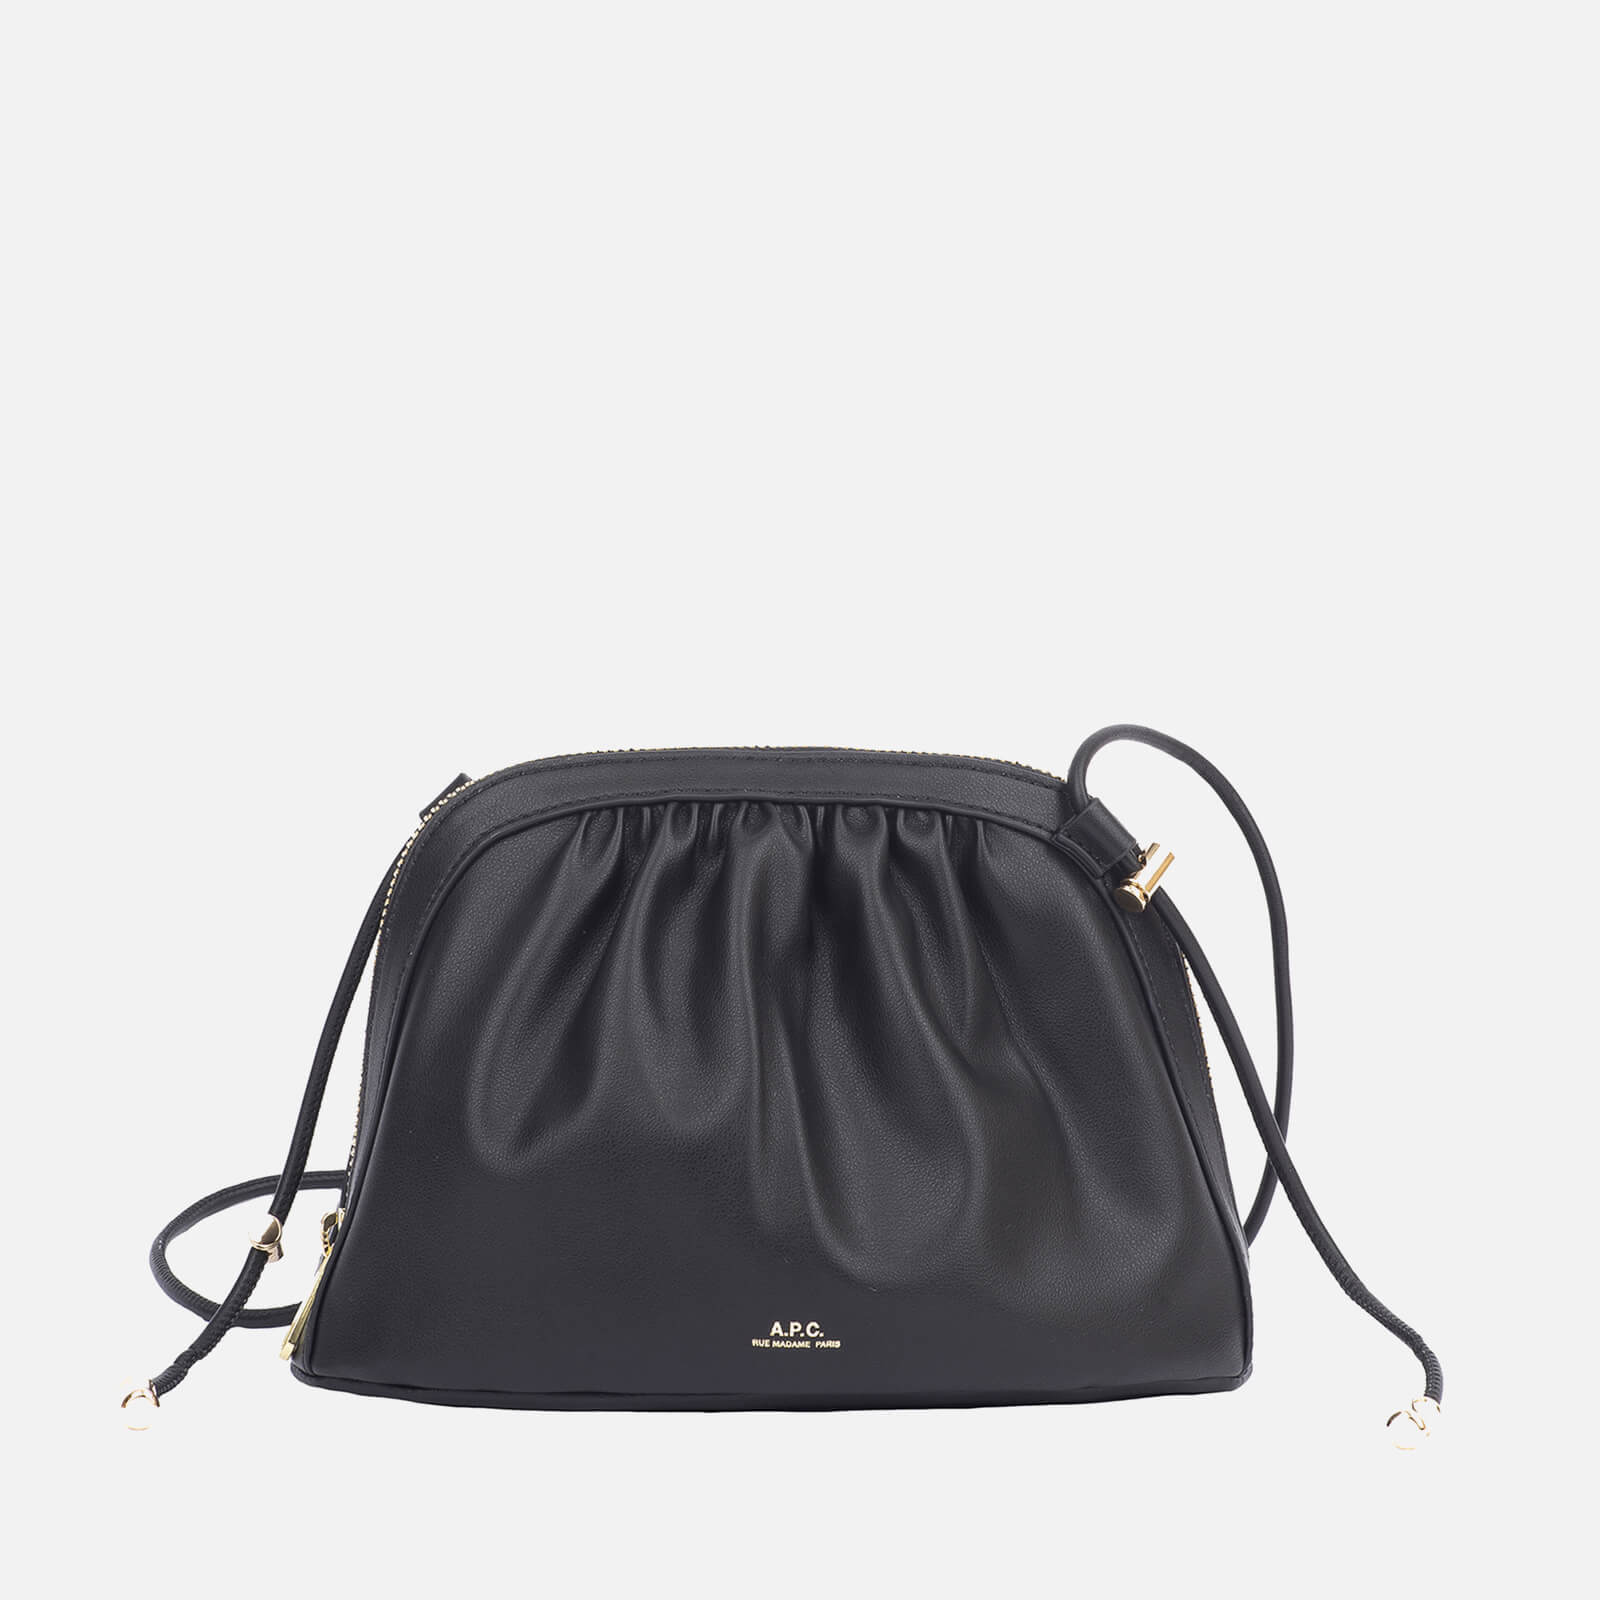 A.P.C Ninon Faux Leather Bag